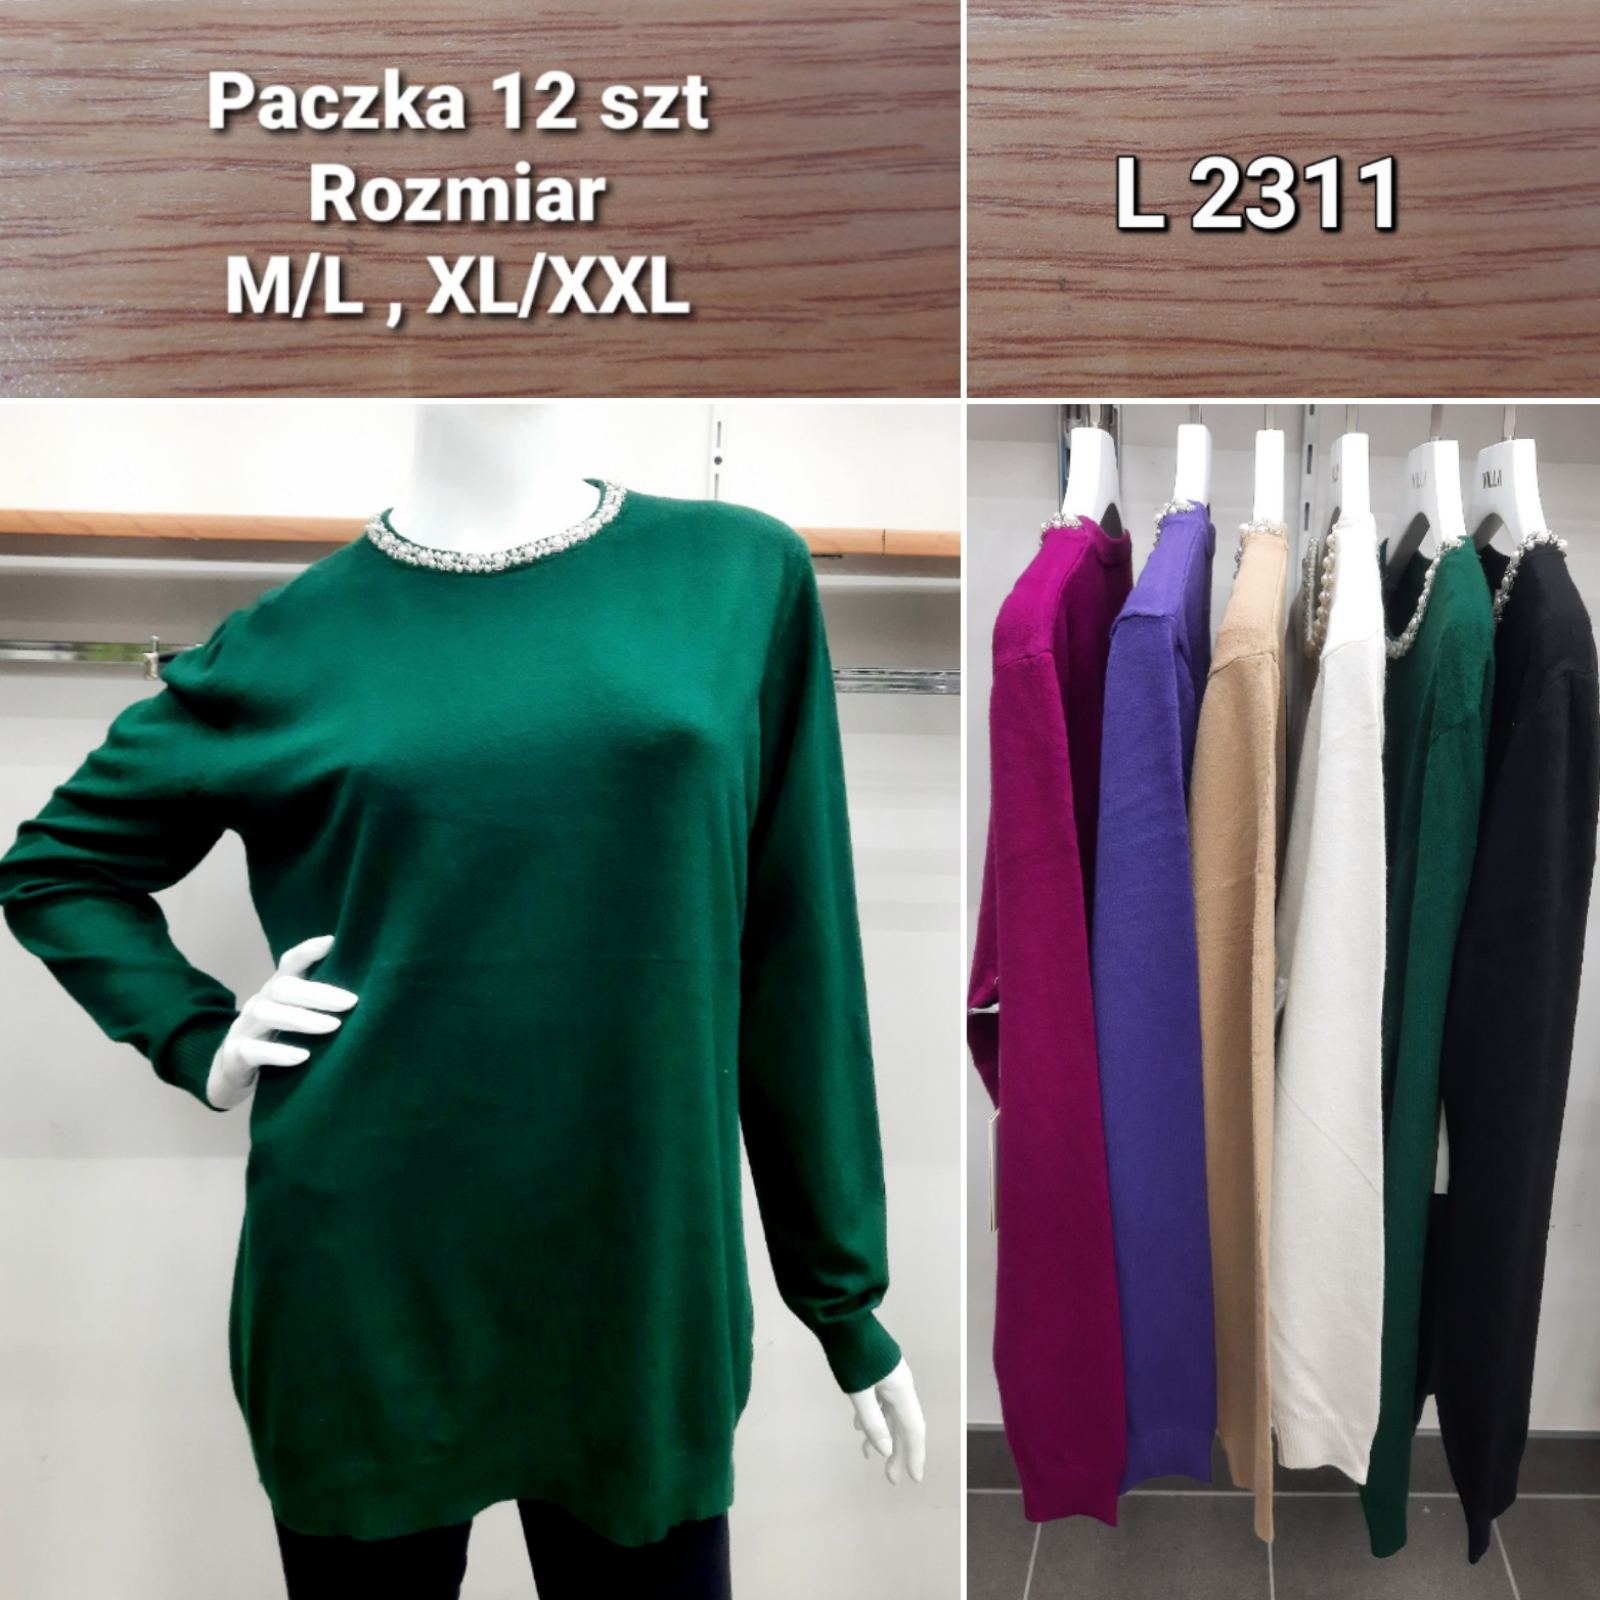 Swetry damskie Roz M/L.XL/2XL, Mix kolor Paczka 14szt